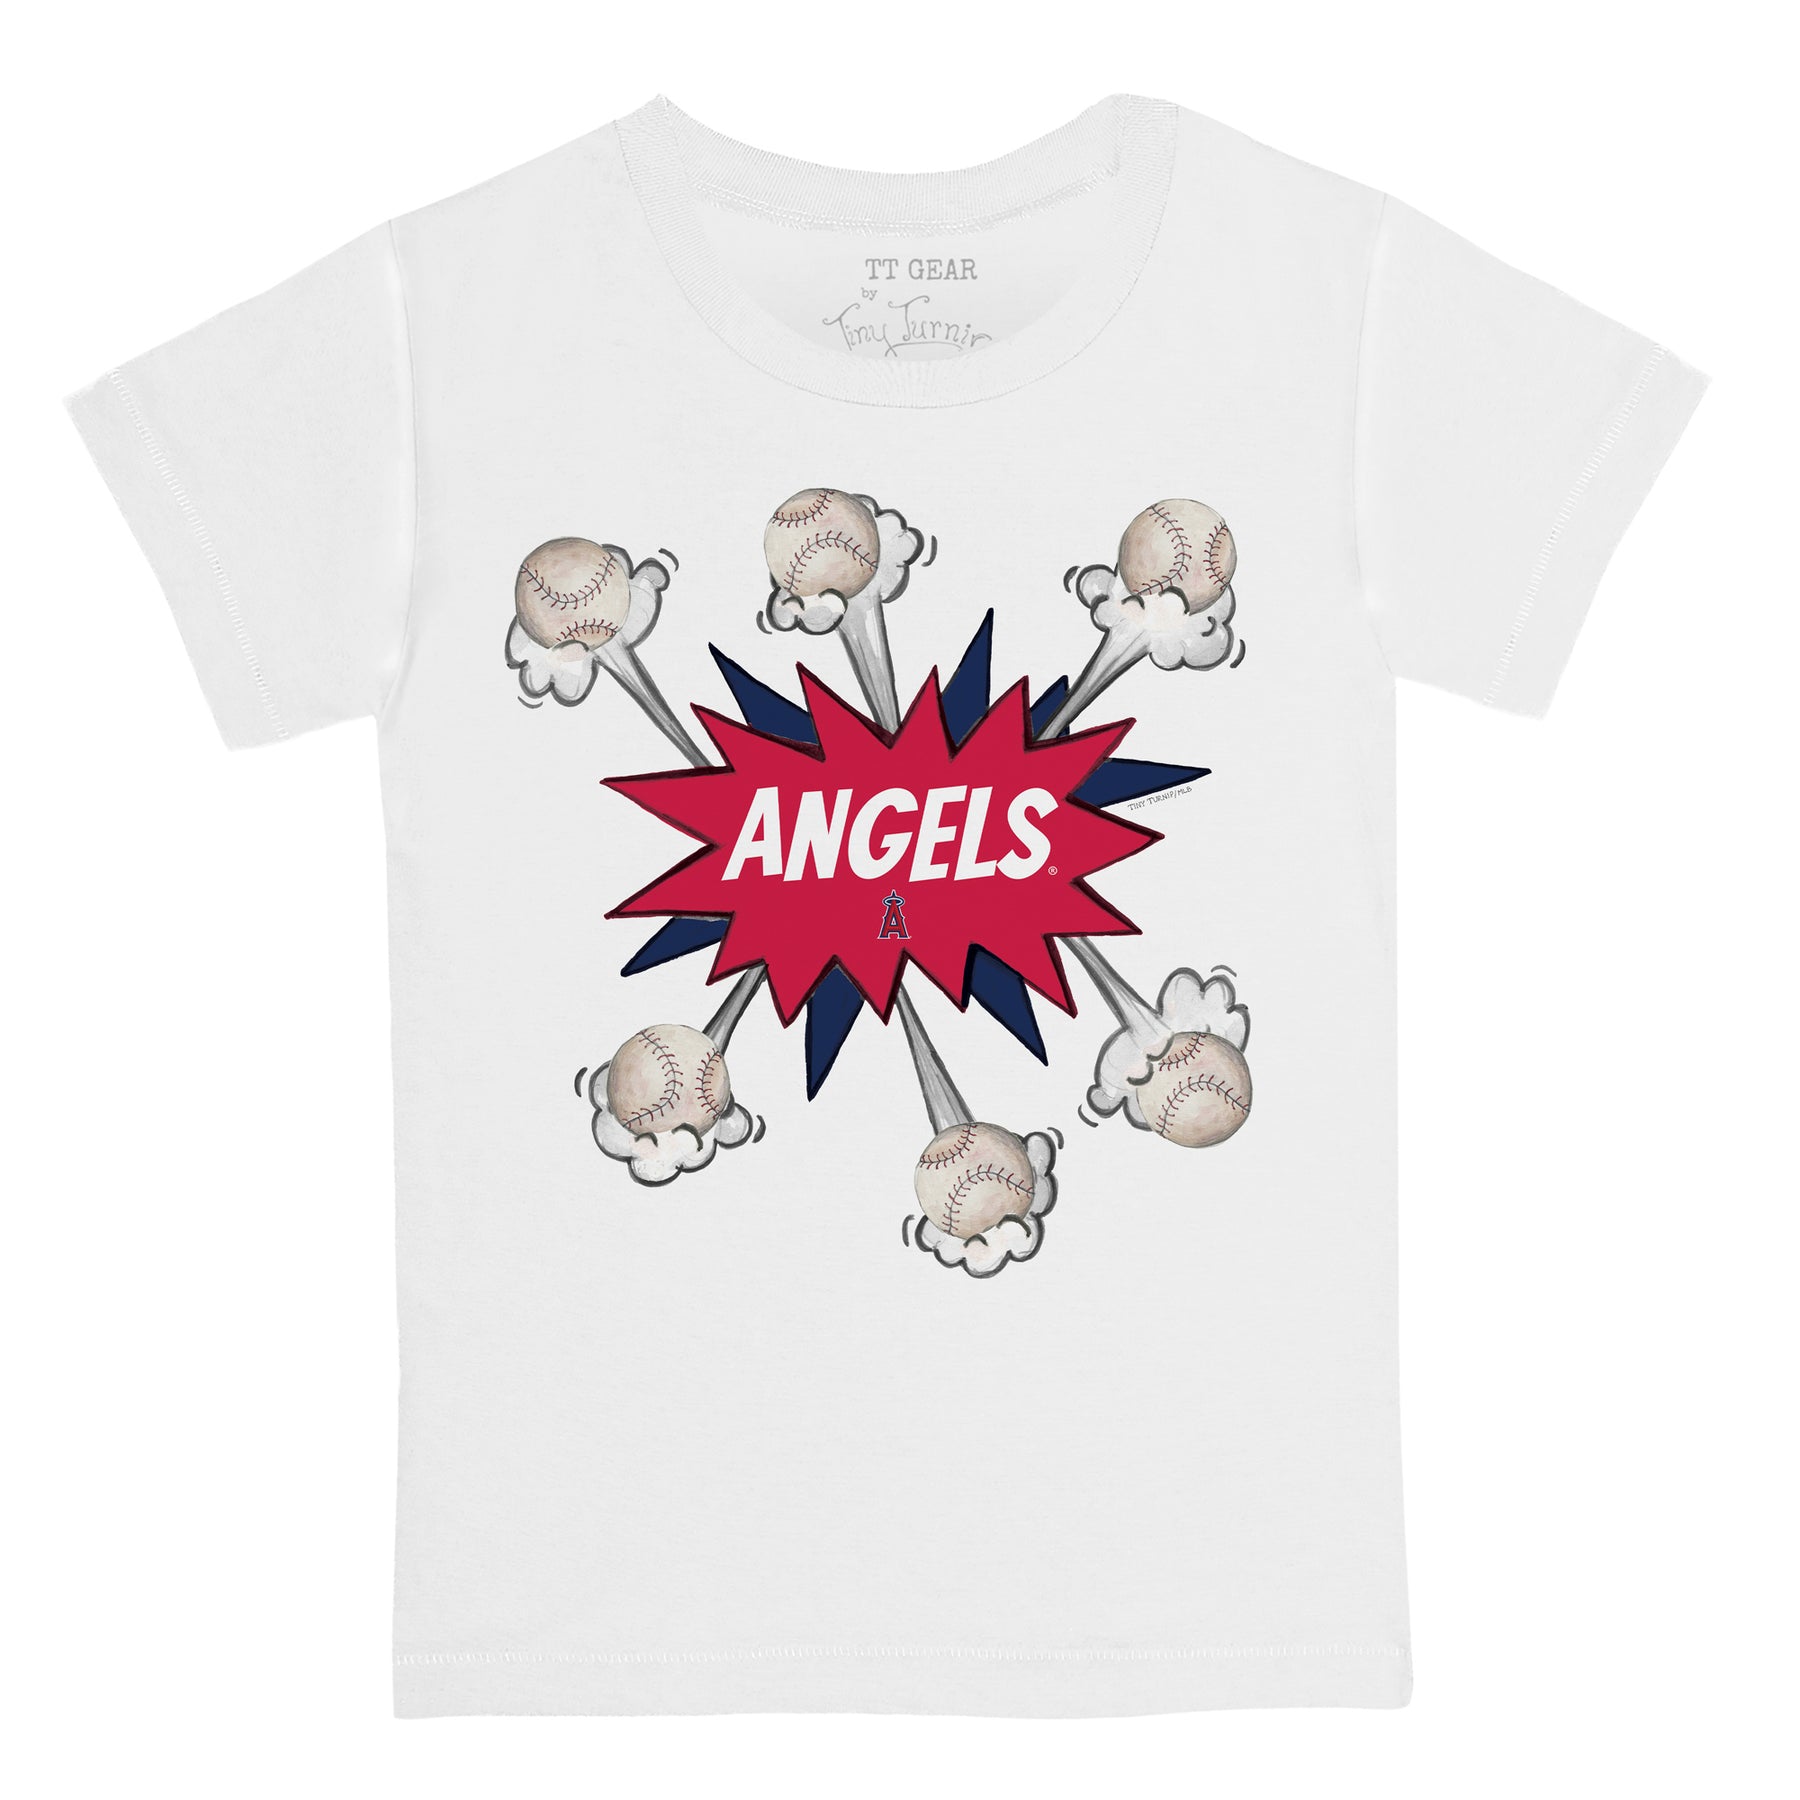 angels baseball tee shirts